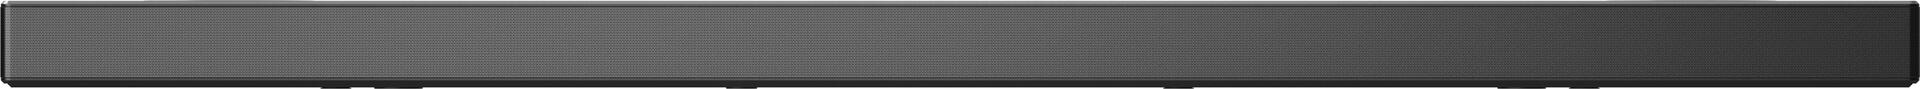 LG SN9YG.DITALLK - 5.1.2 Kanäle - 520 W - DTS Digital Surround,DTS Virtual:X,DTS-HD HR,DTS-HD Master Audio,DTS:X,Dolby Atmos,Dolby... - Bass Blast - Bass Blast+ - Standard - 300 W - Kabellos (SN9YG)